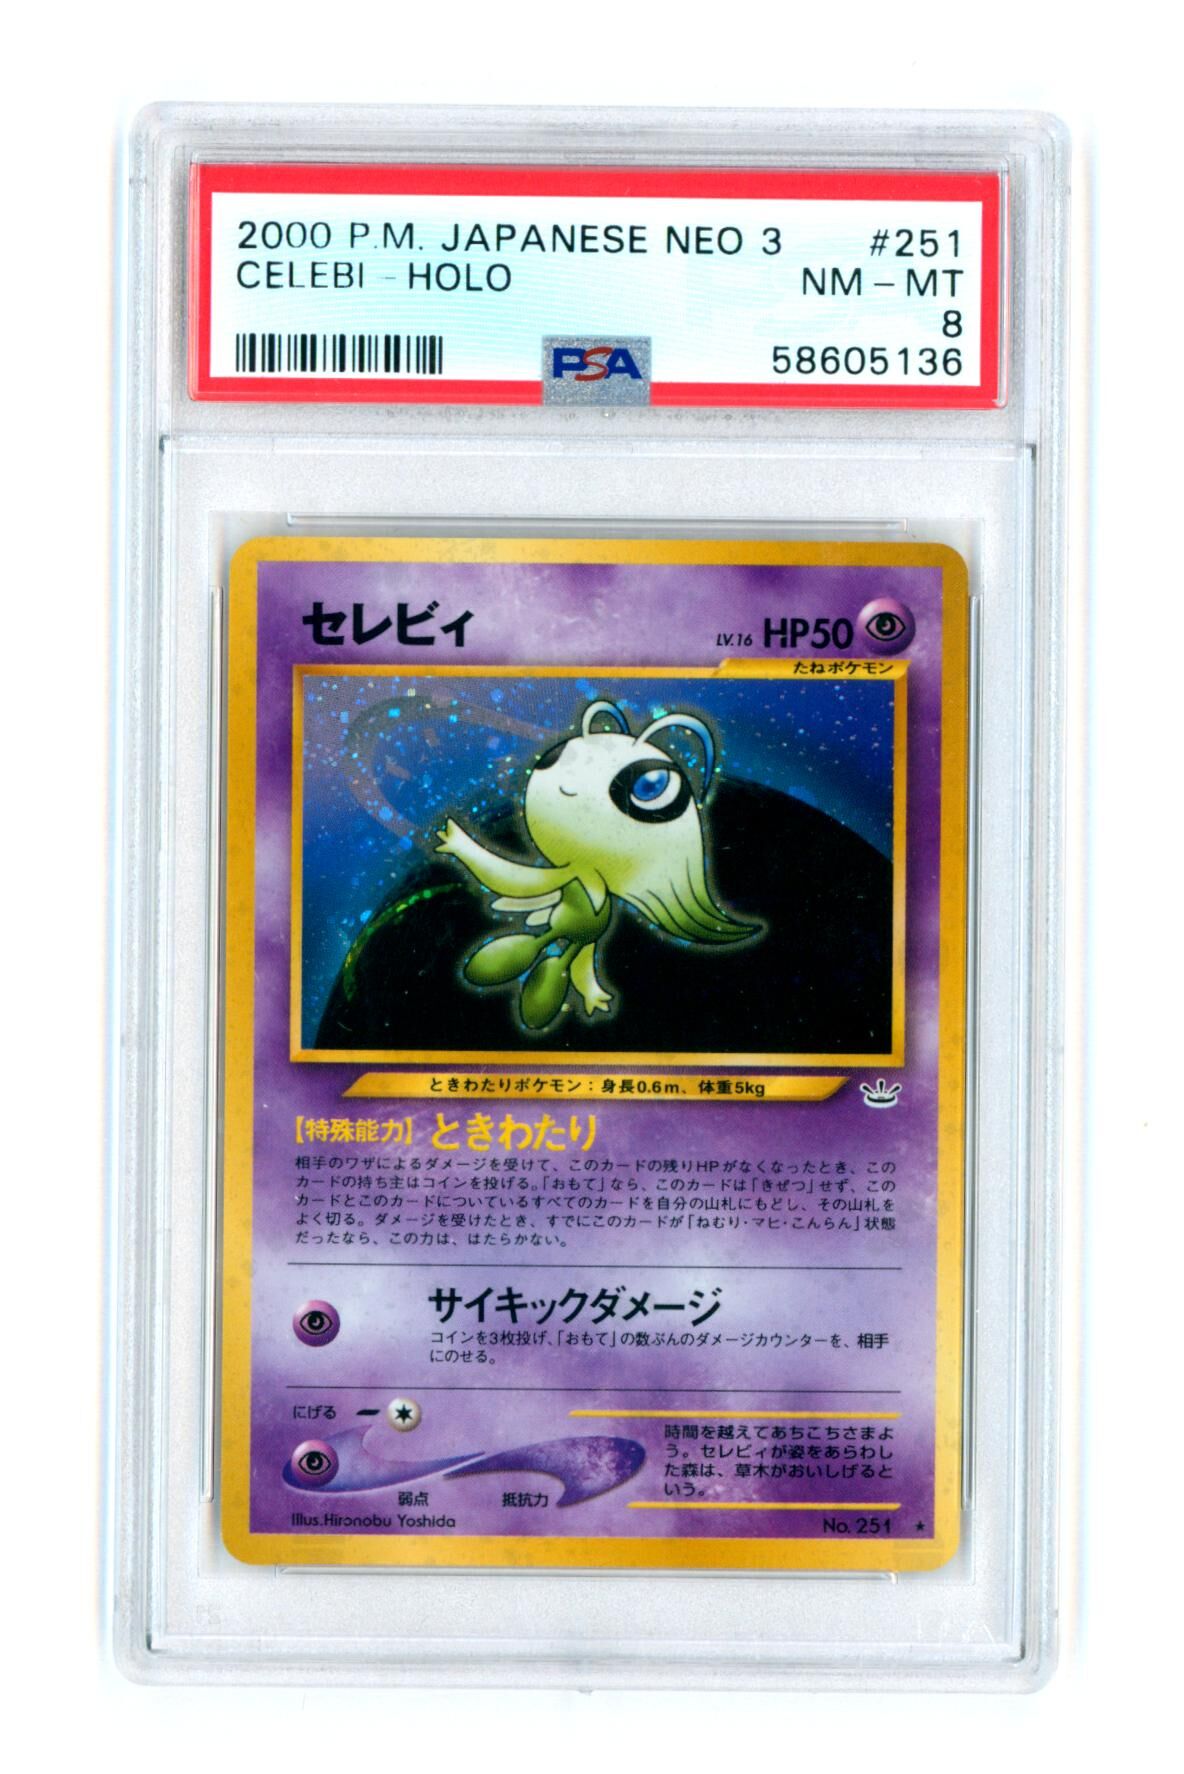 Celebi - Japanese Neo 3 - Holo - PSA 8 NM-MT - Pokémon